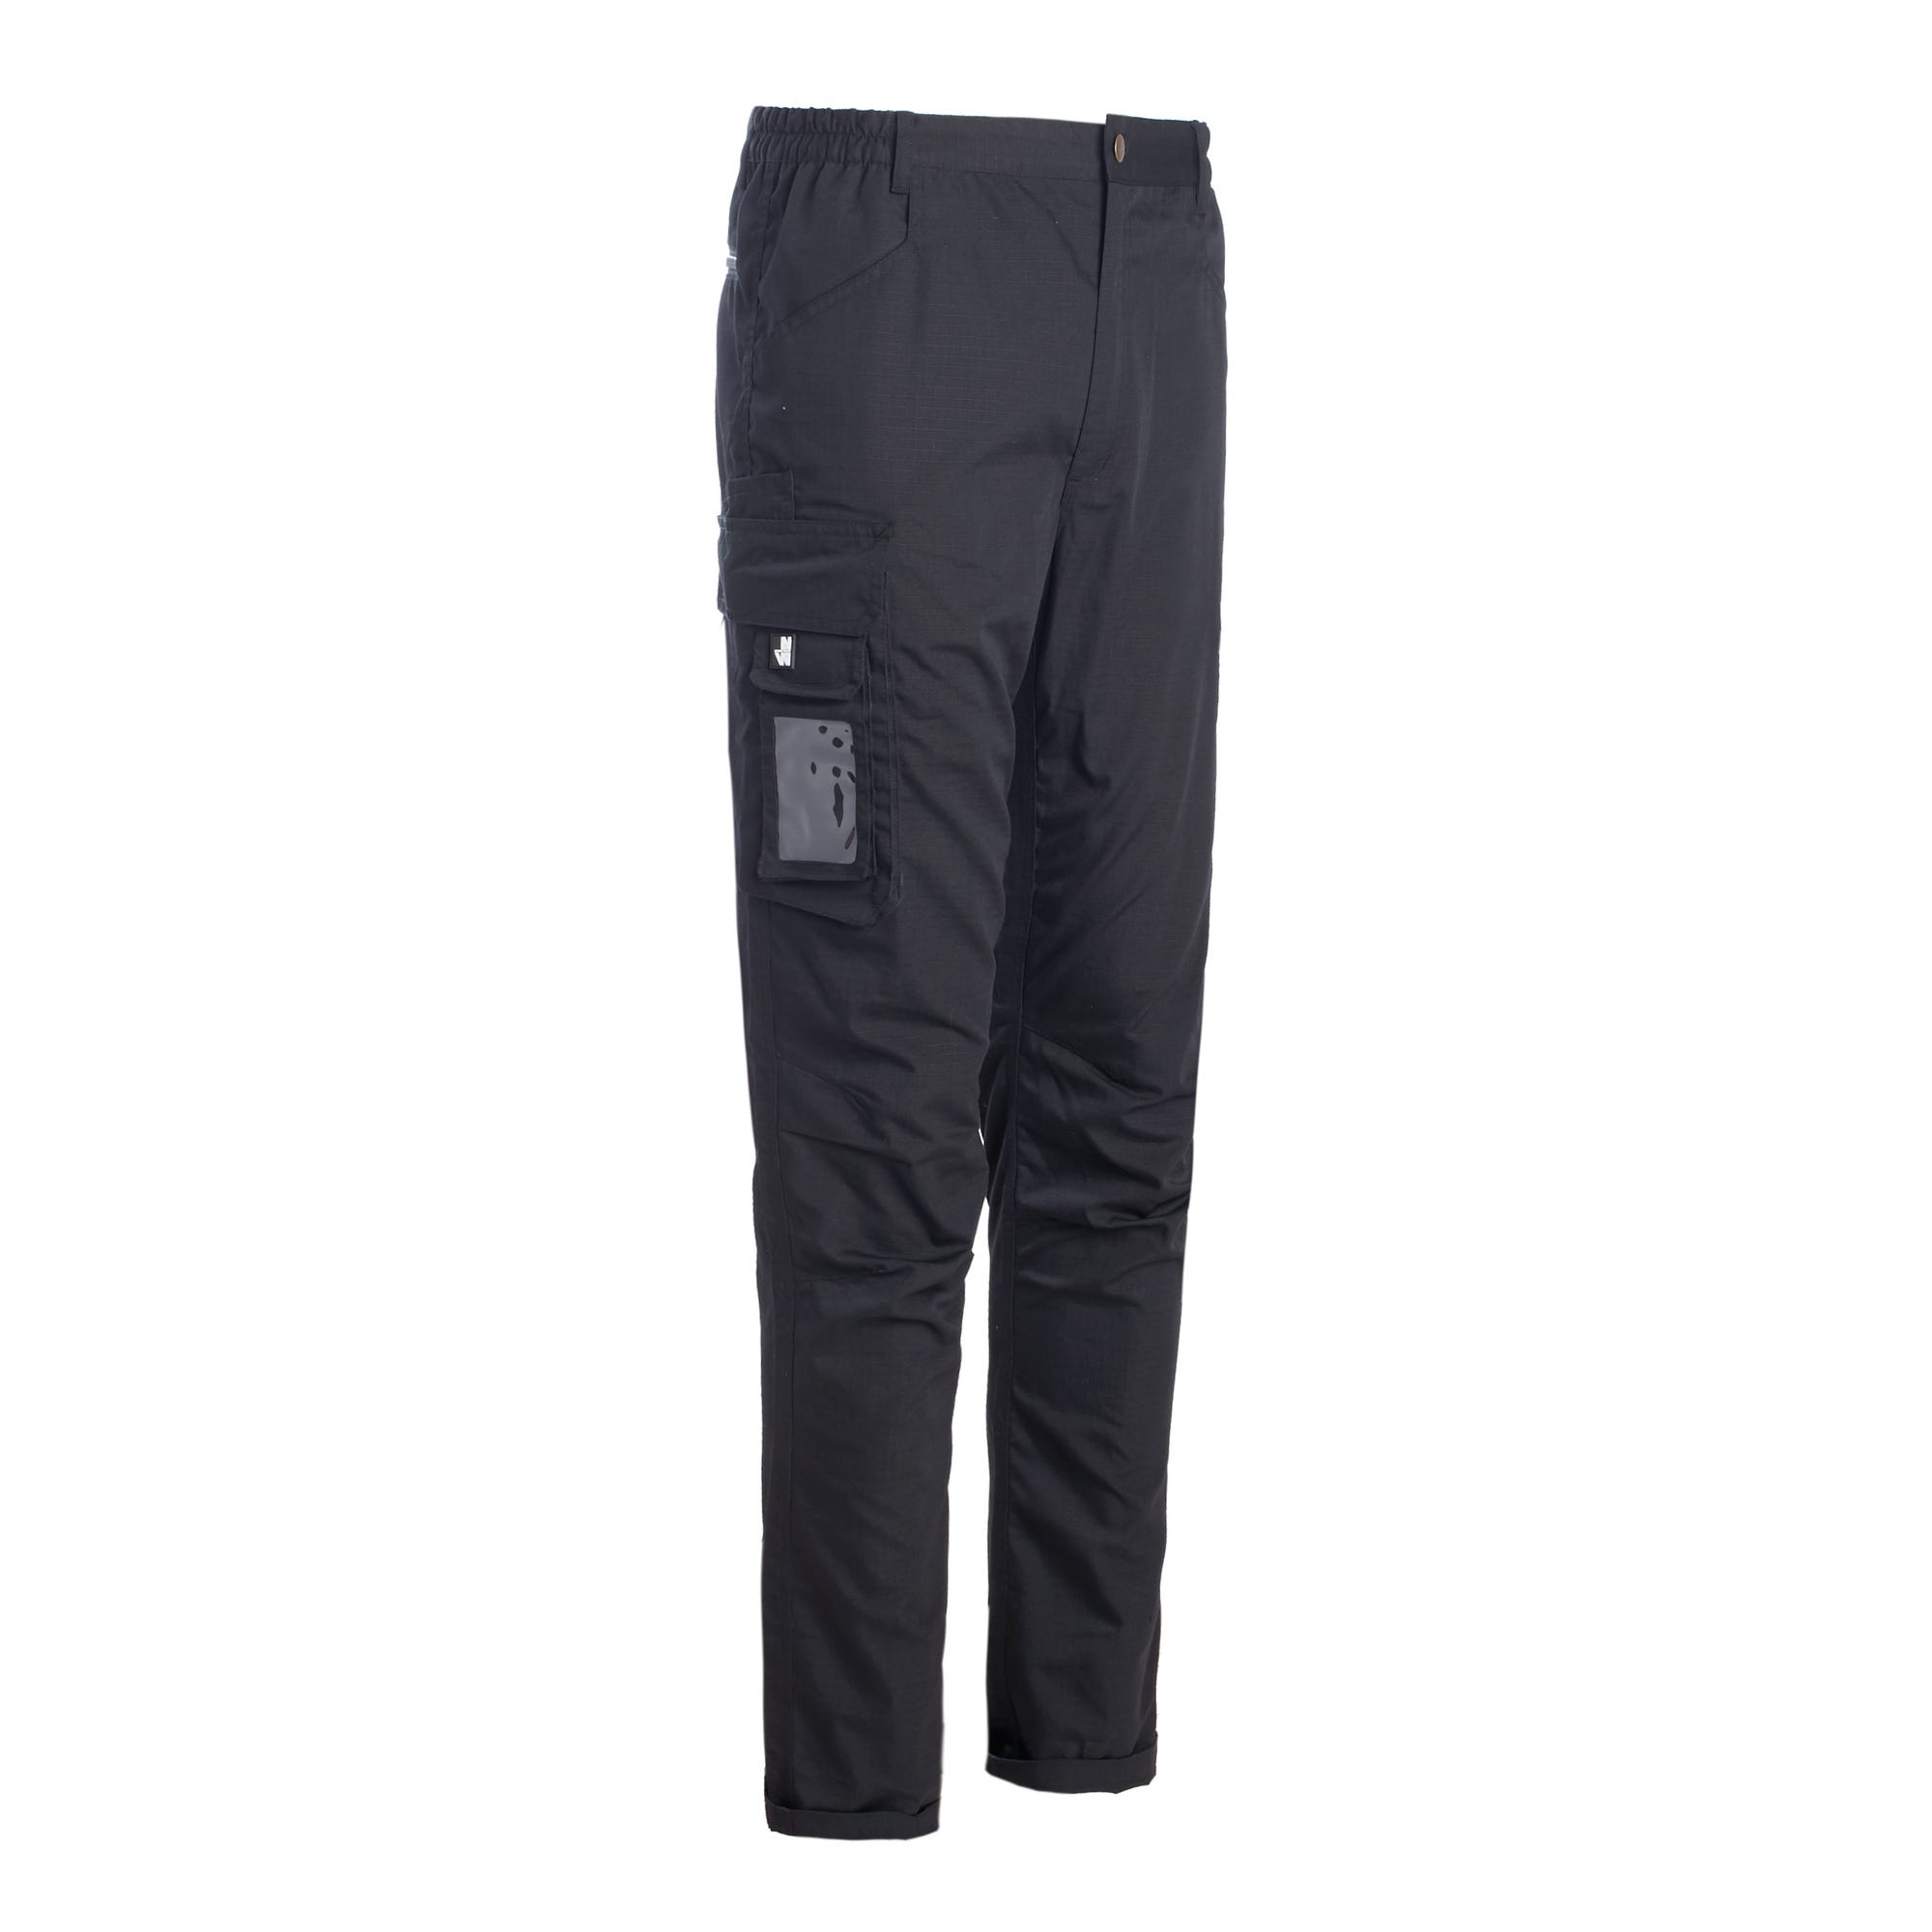 Pantalon de travail noir T.56 EDWARD - NORTH WAYS 2